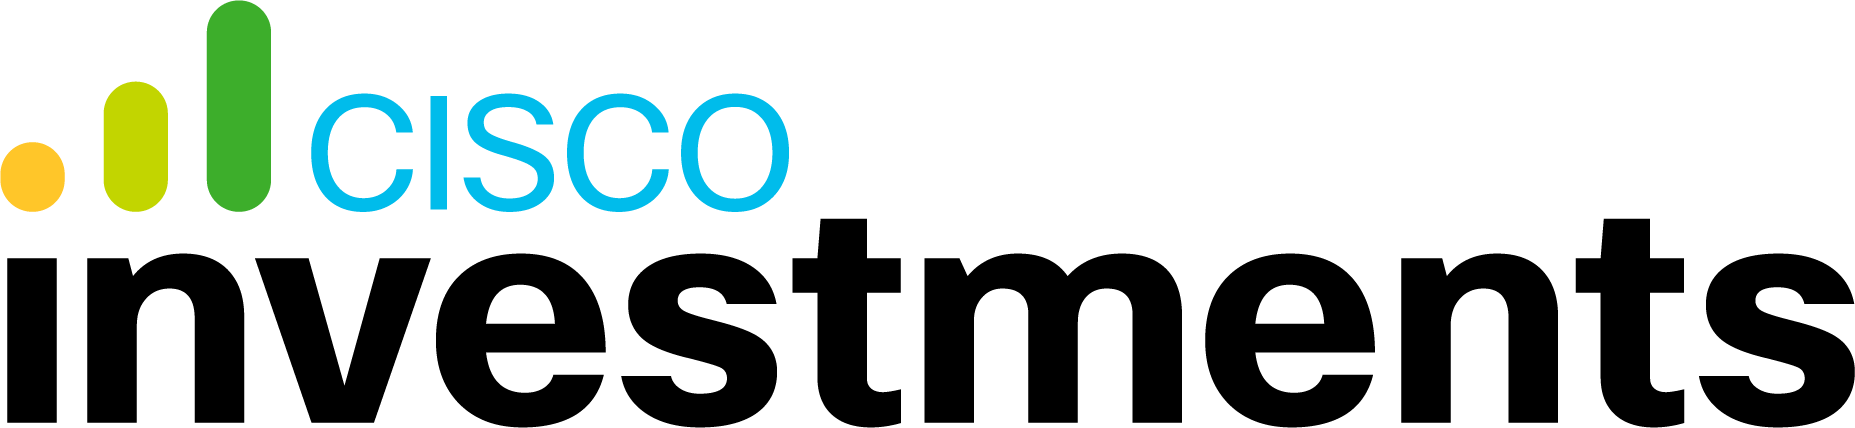 Cisco Logo PNG Image